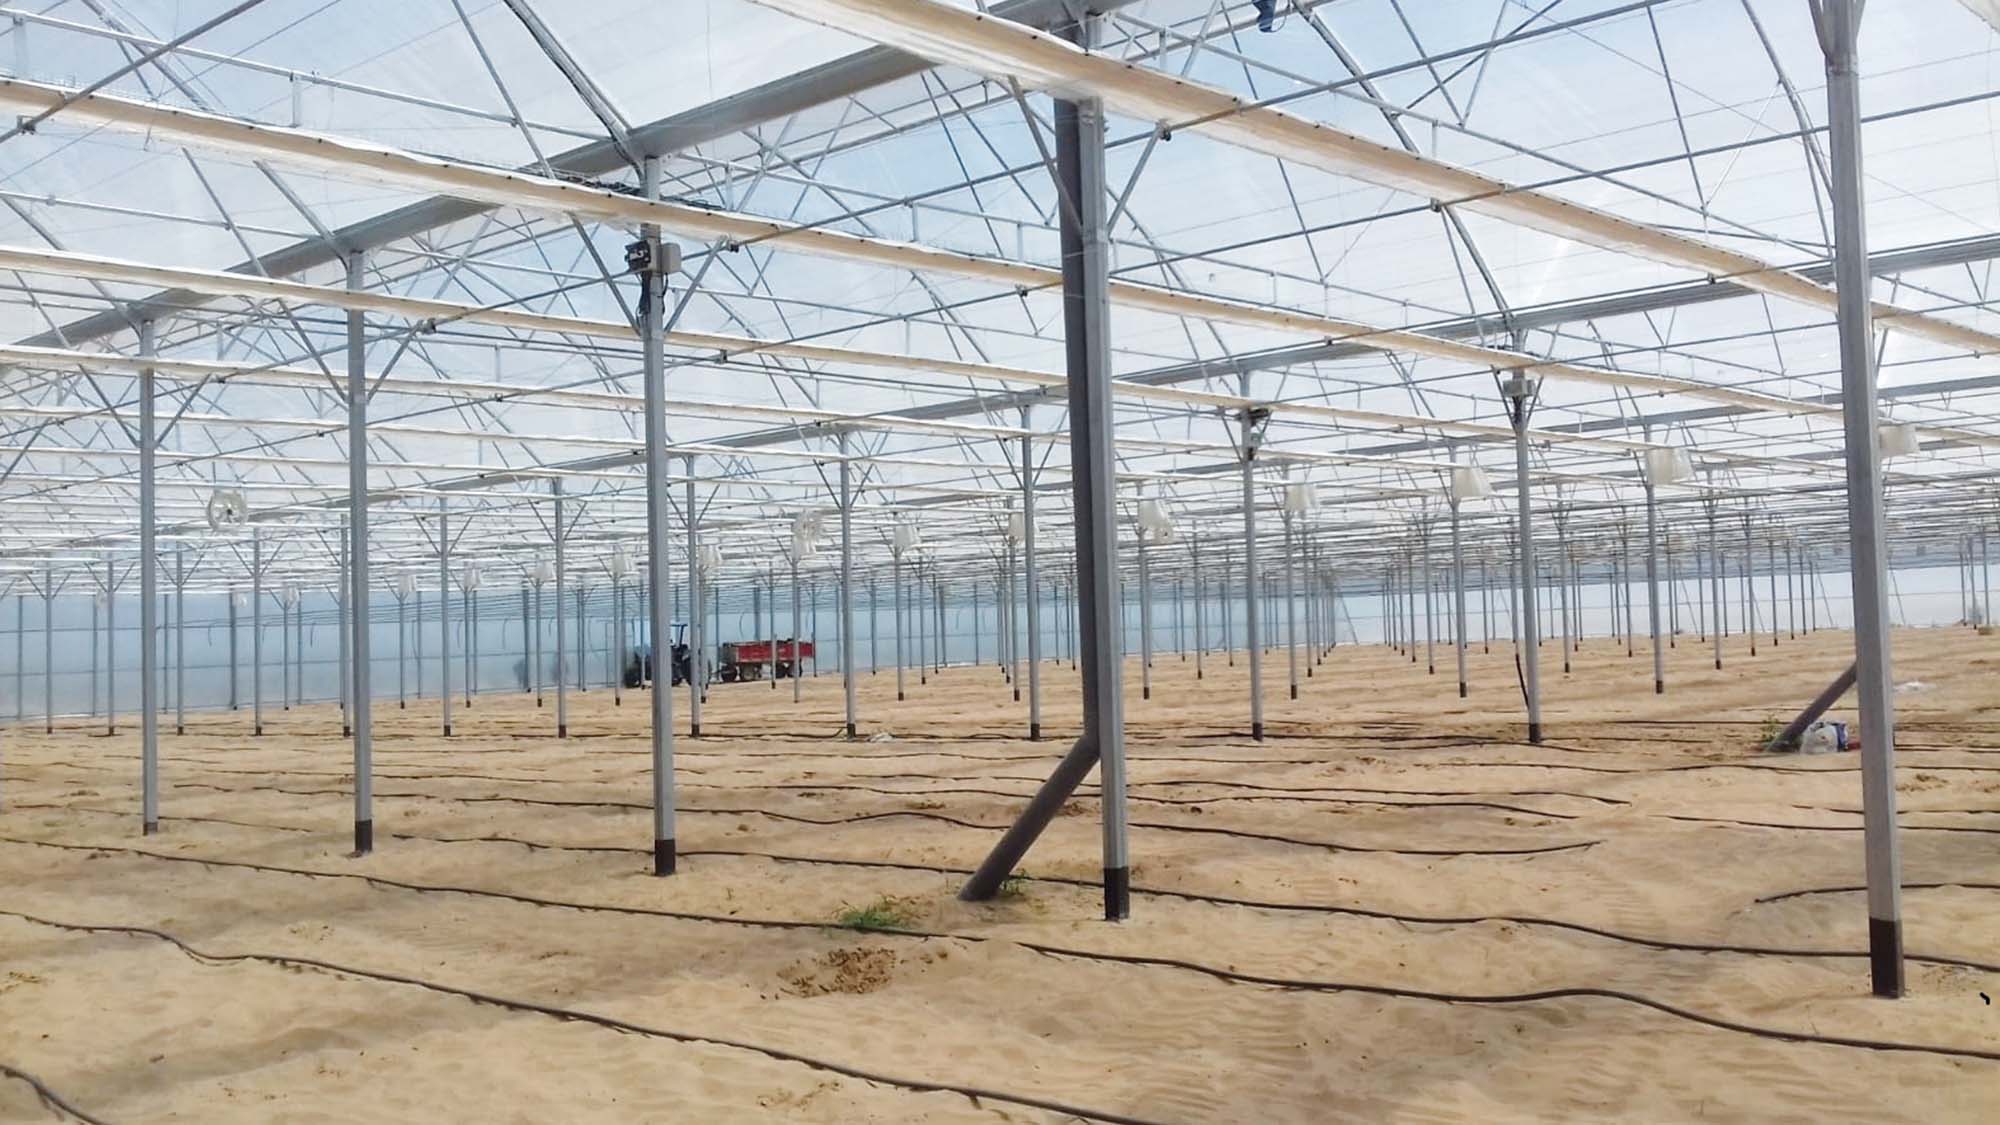 PLANASA relies on ULMA Agrícola for an installation in Morocco